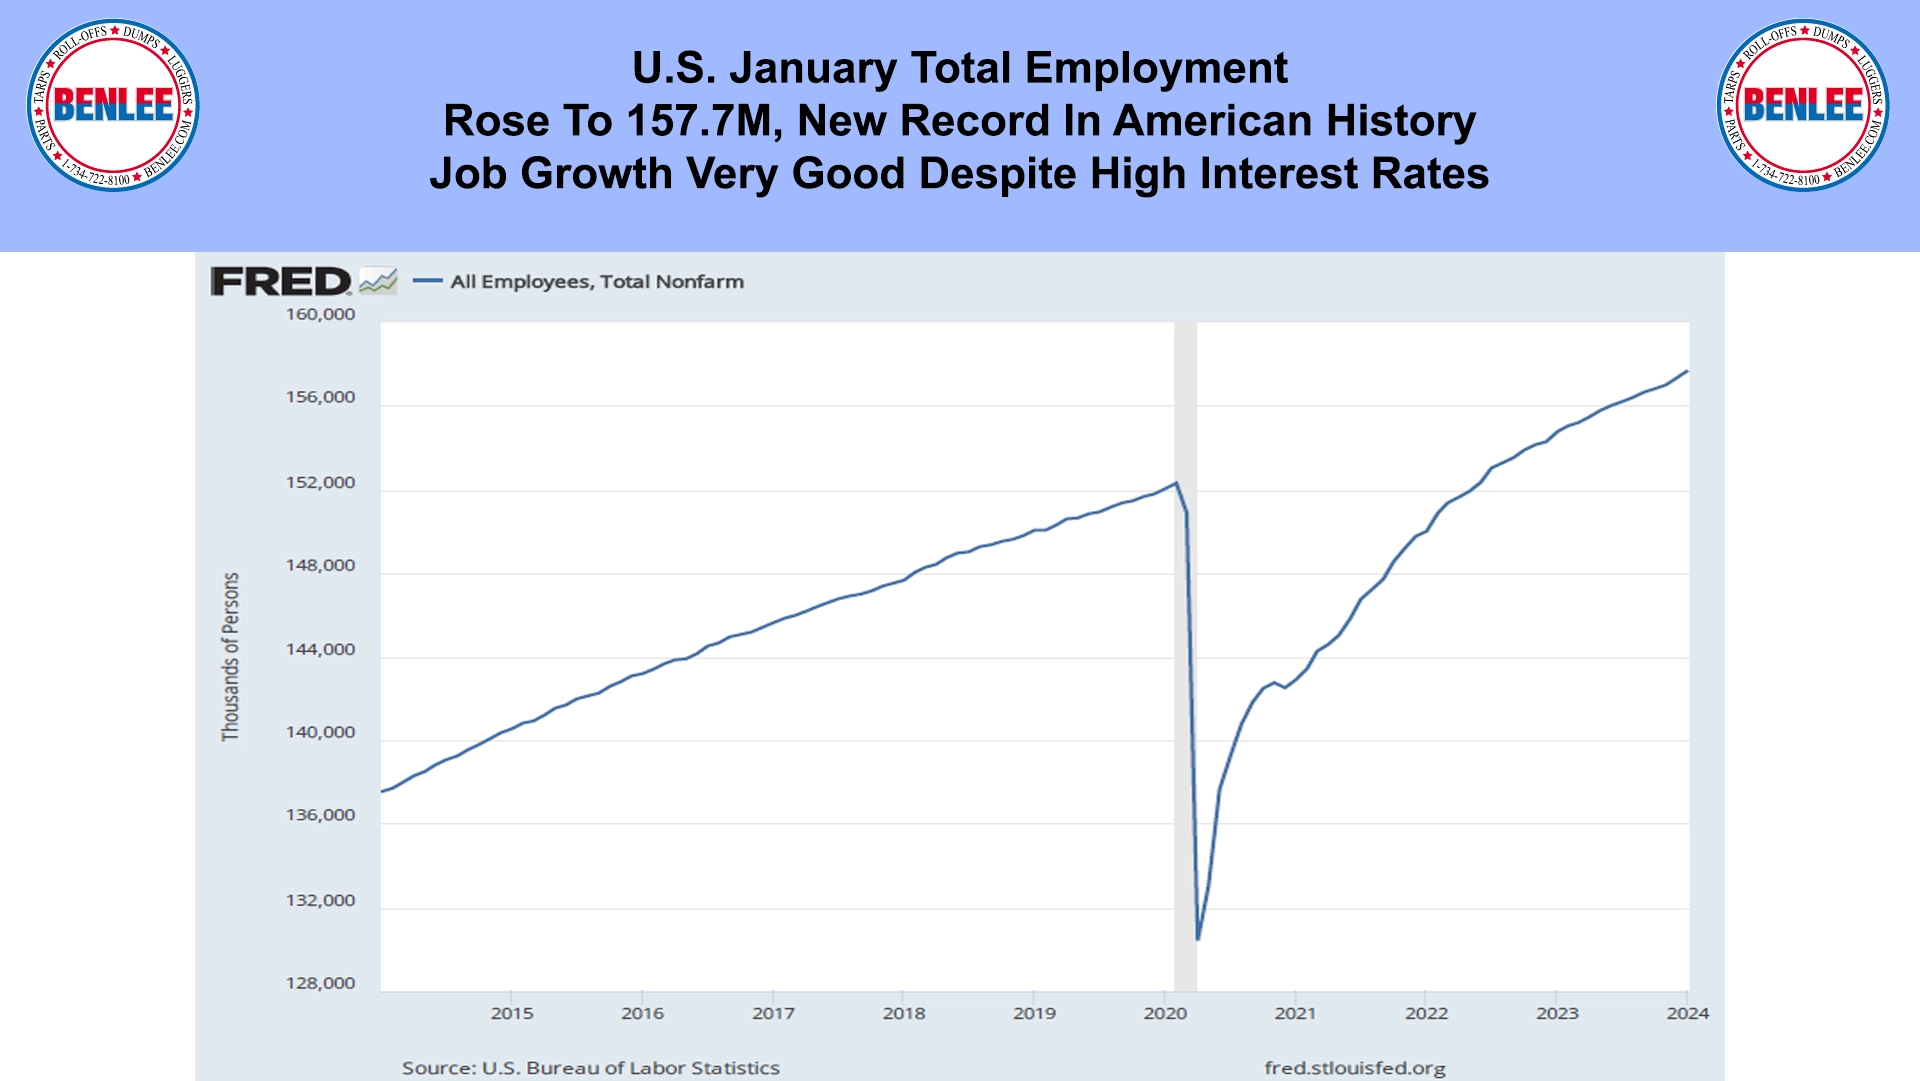 U.S. January Total Employment